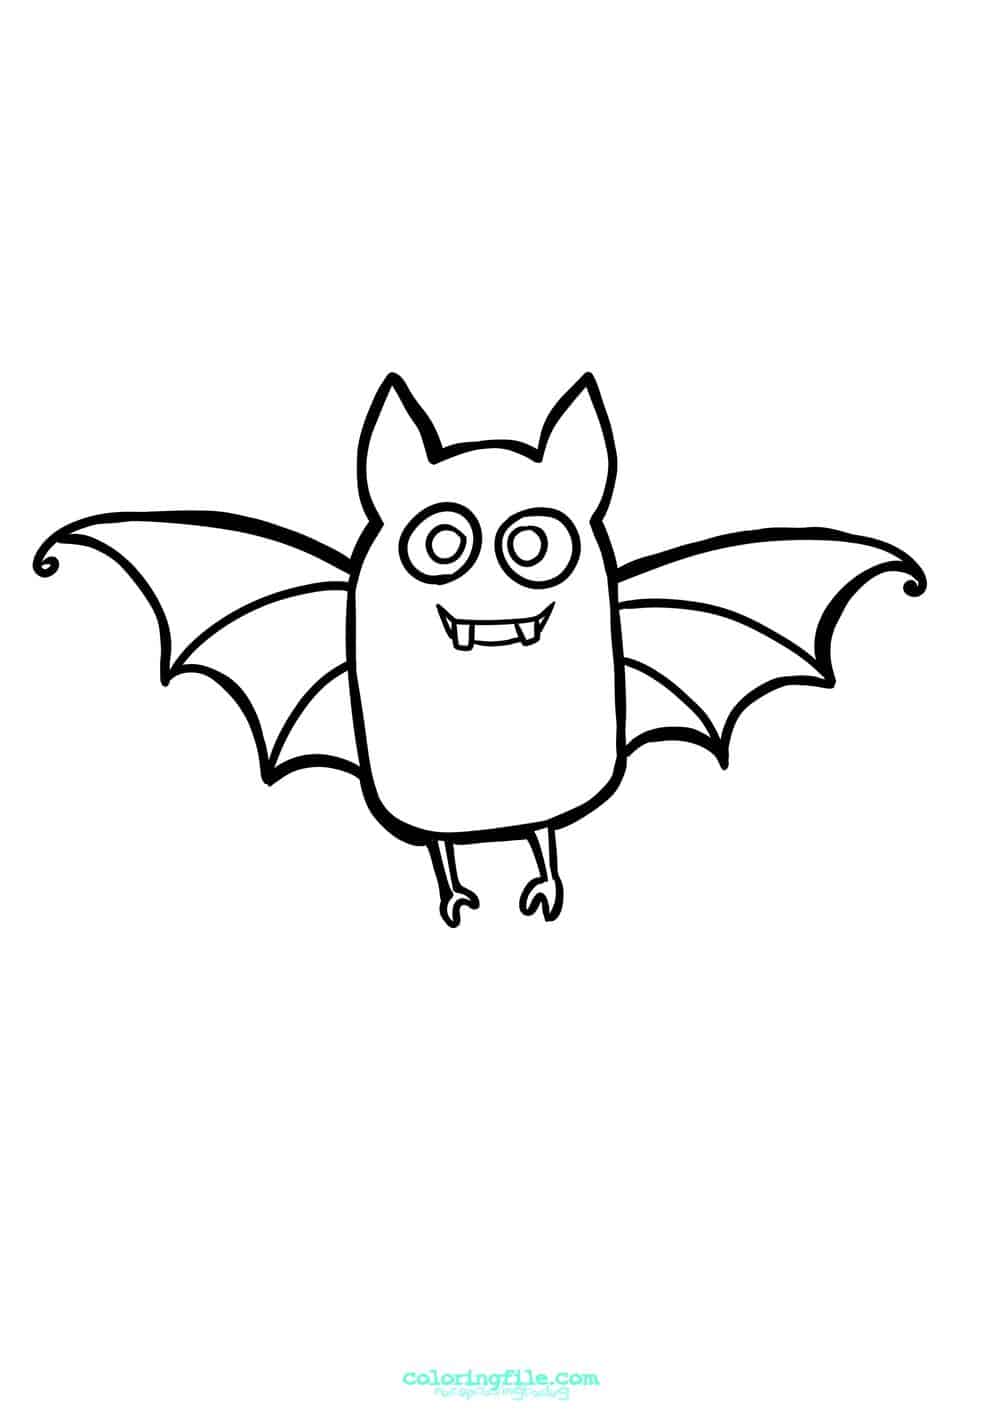 Cartoon halloween bat coloring pages